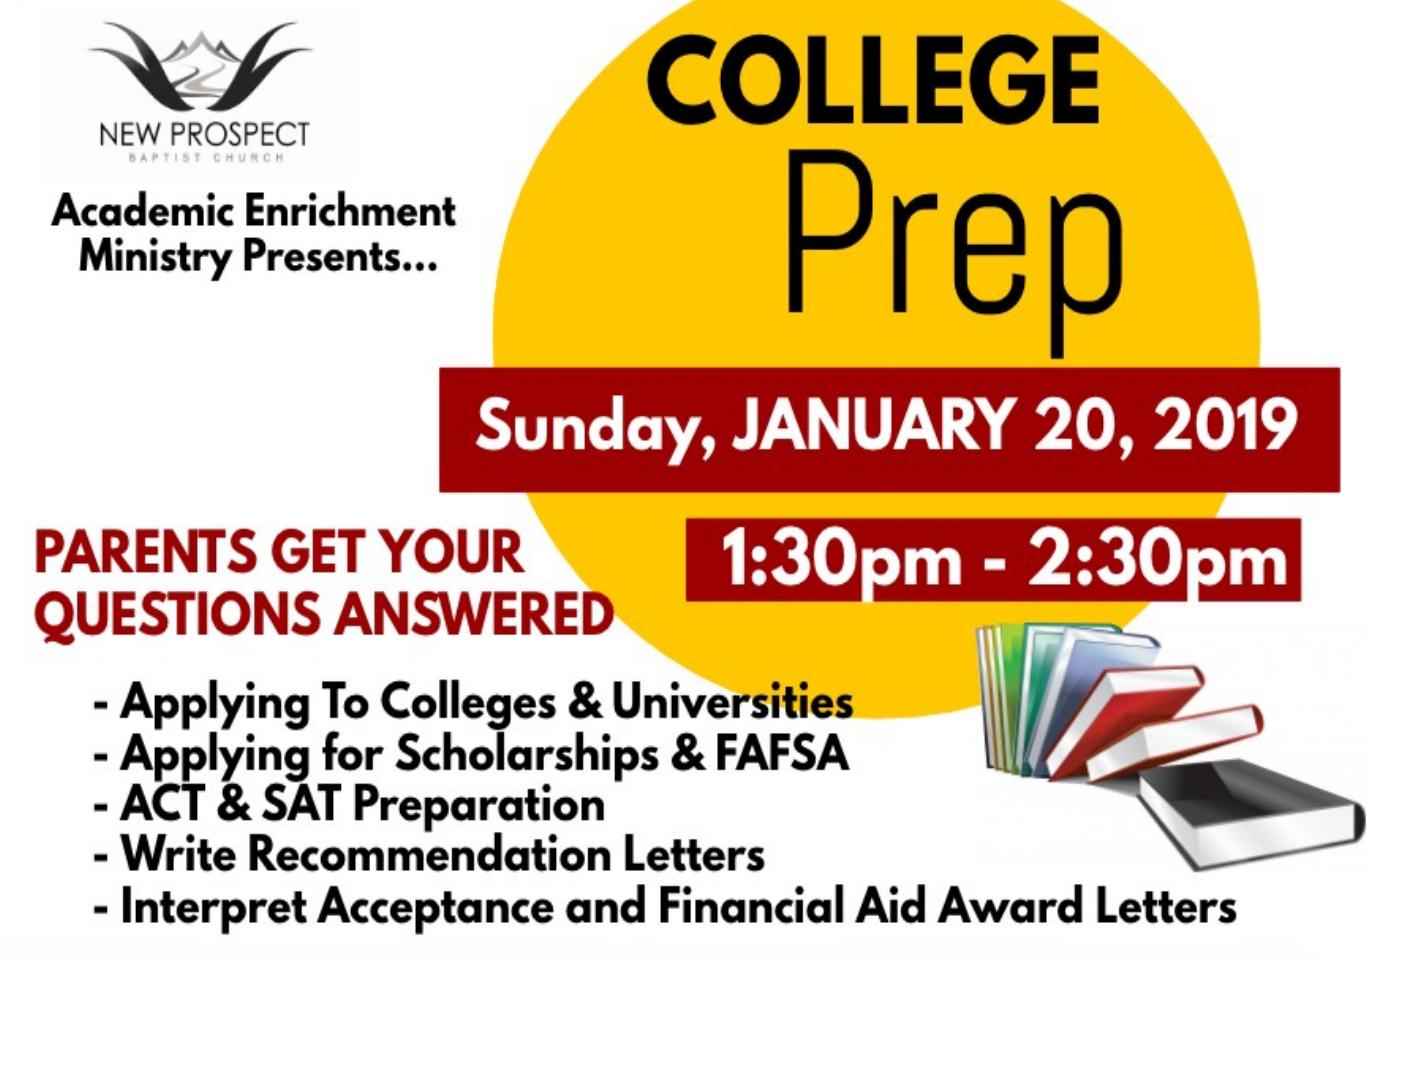 New Prospect College Prep Workshop on Sunday January 20th 1:30 - 2:30 p.m.